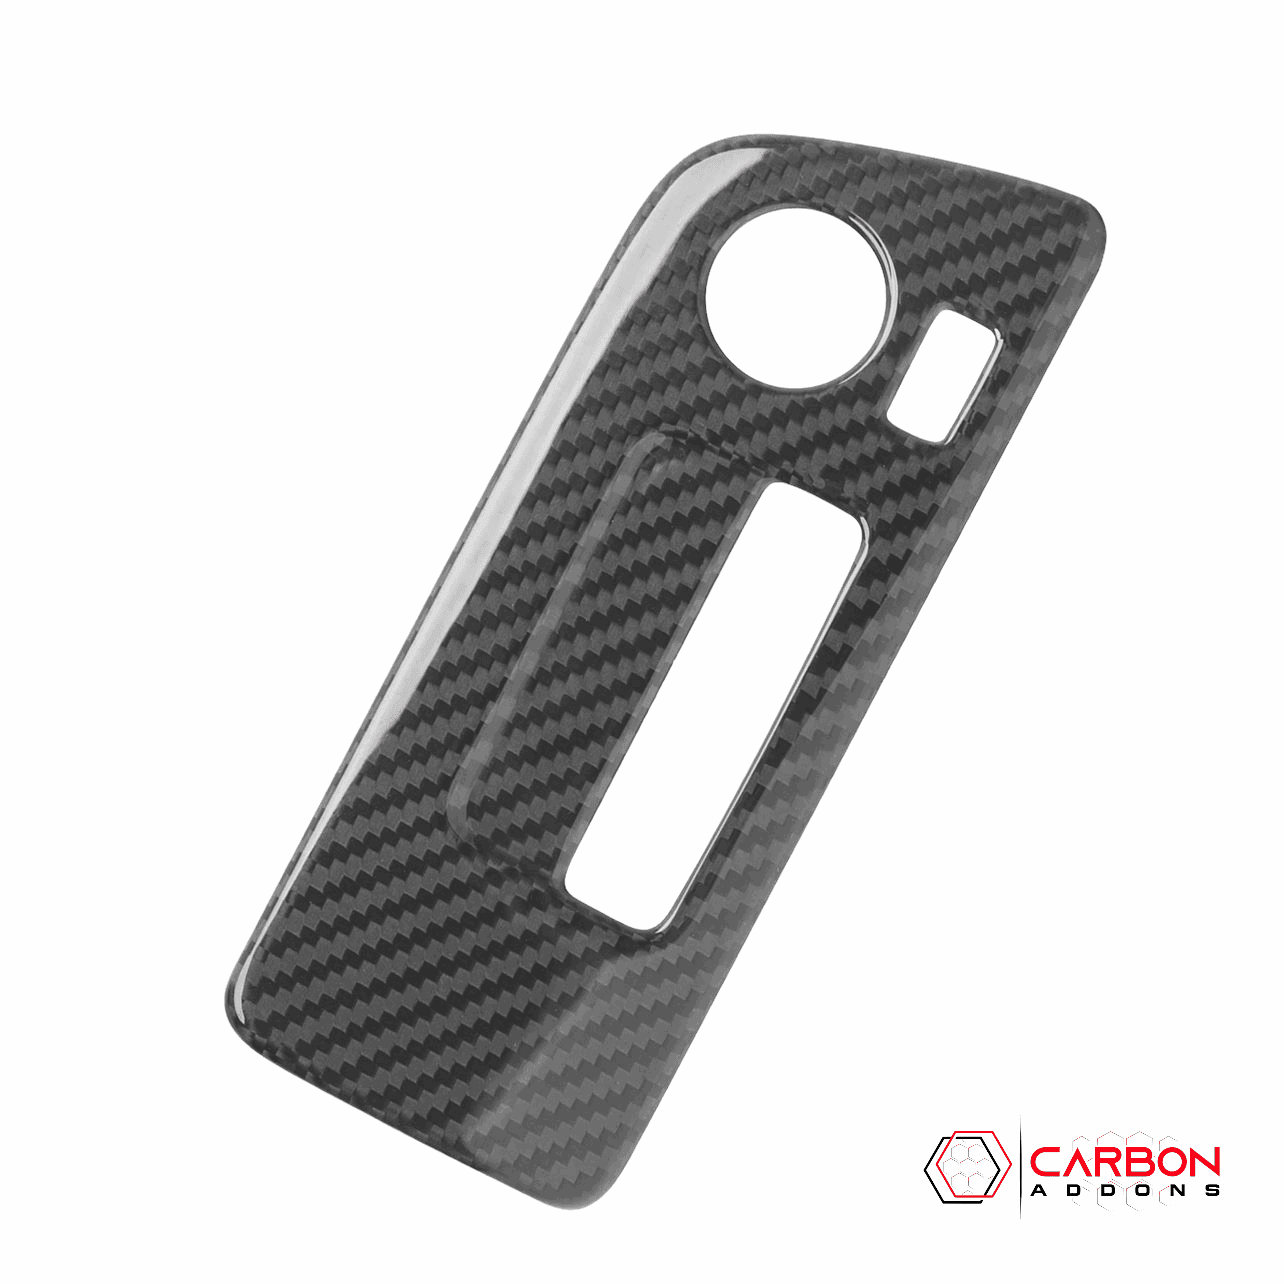 C7 Corvette 2014-2019 Real Carbon Fiber Headlight Switch Trim Cover - carbonaddons Carbon Fiber Parts, Accessories, Upgrades, Mods